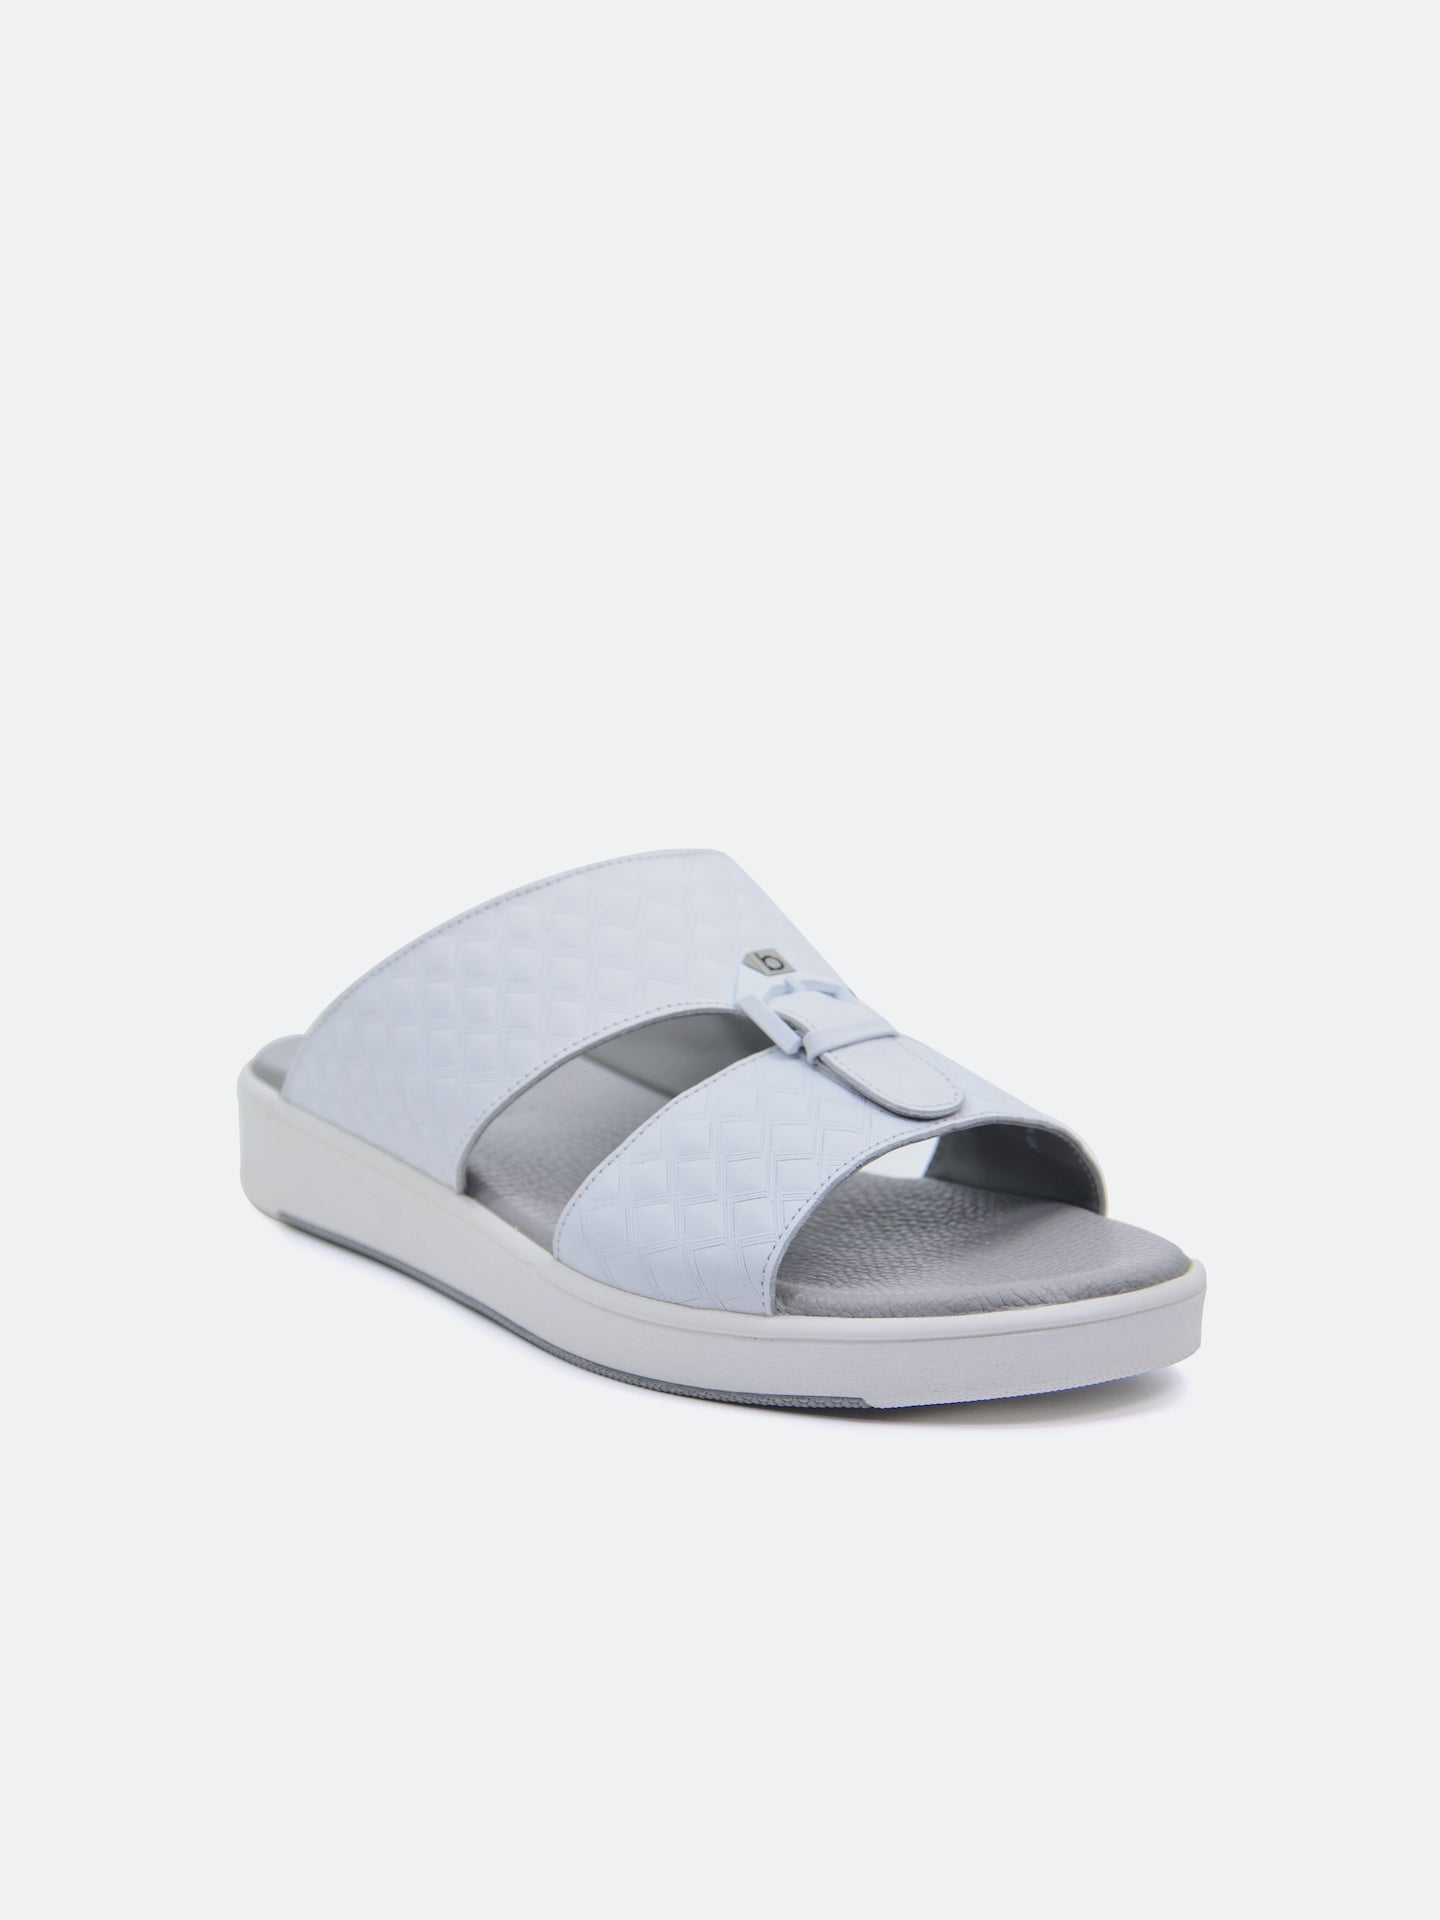 Barjeel Uno B-09 Men's Arabic Sandals #color_White